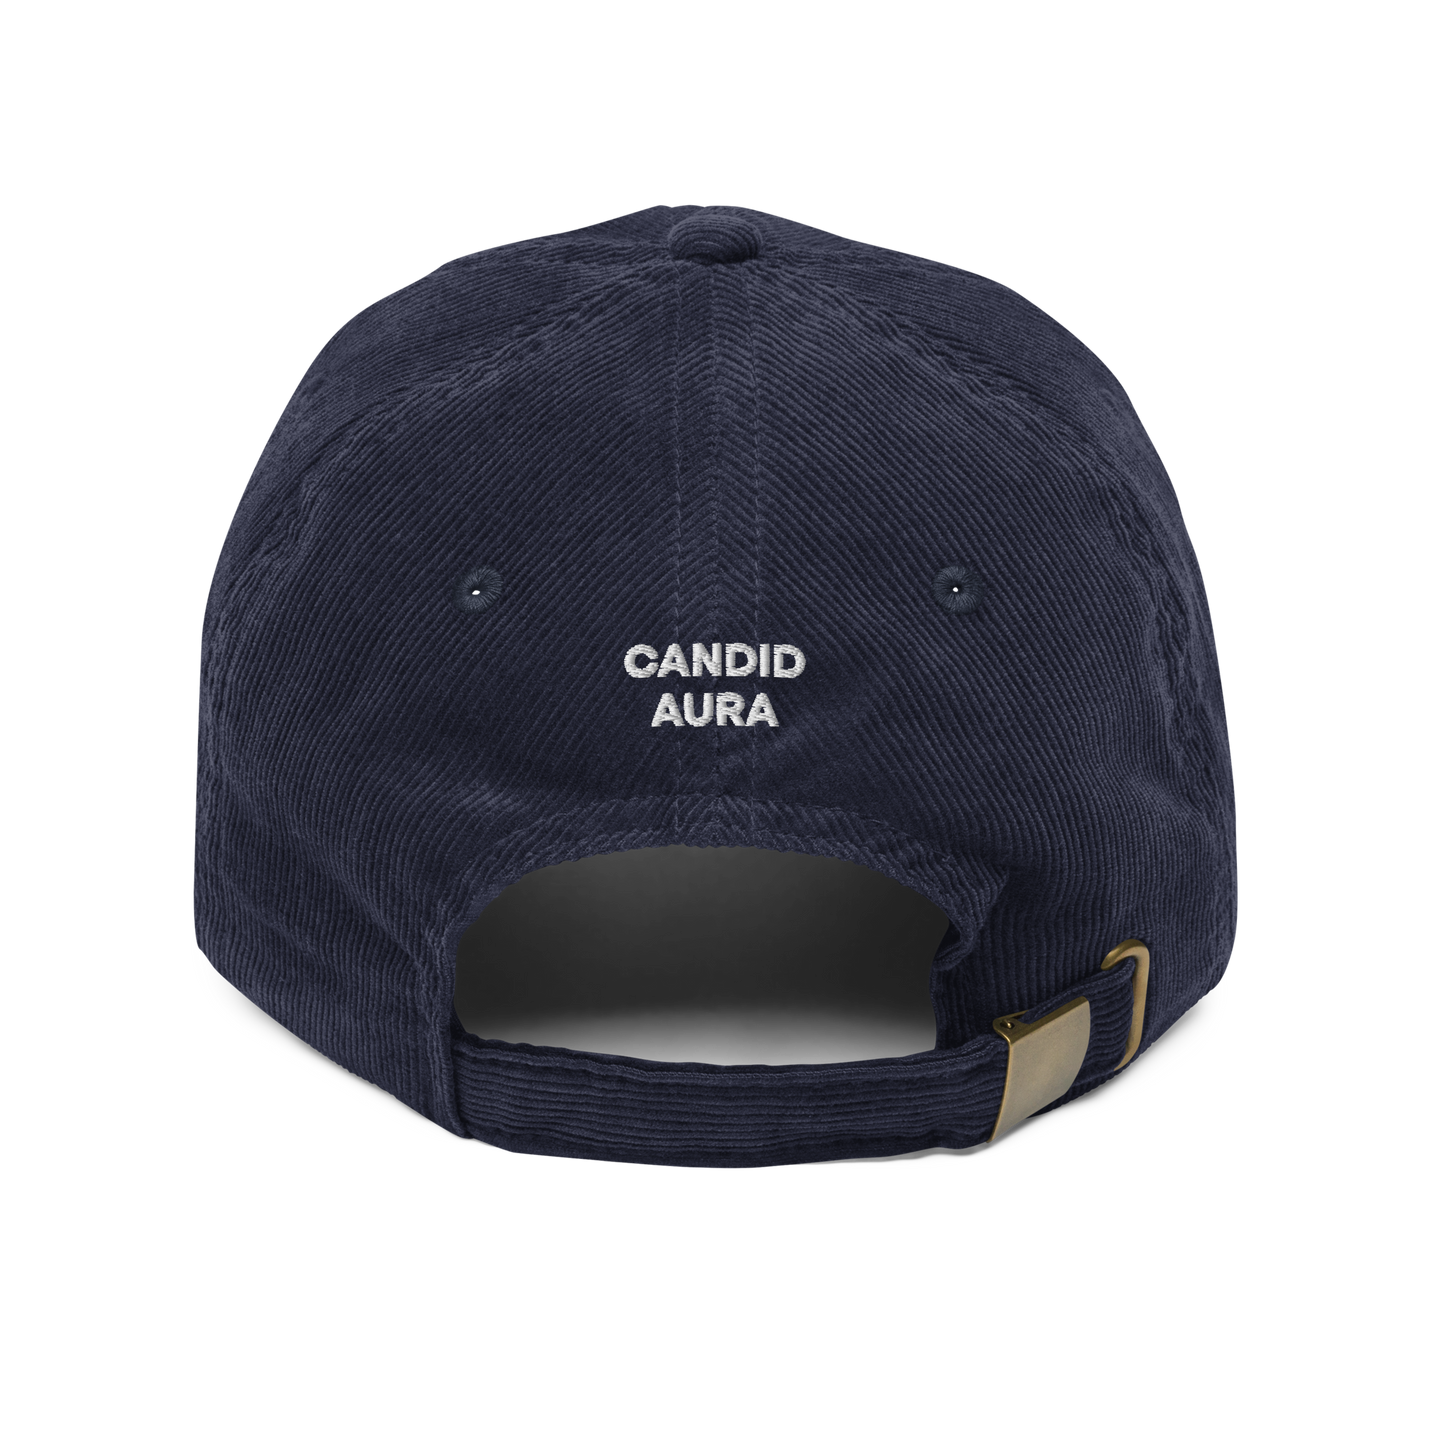 Carpe Diem Corduroy Hat